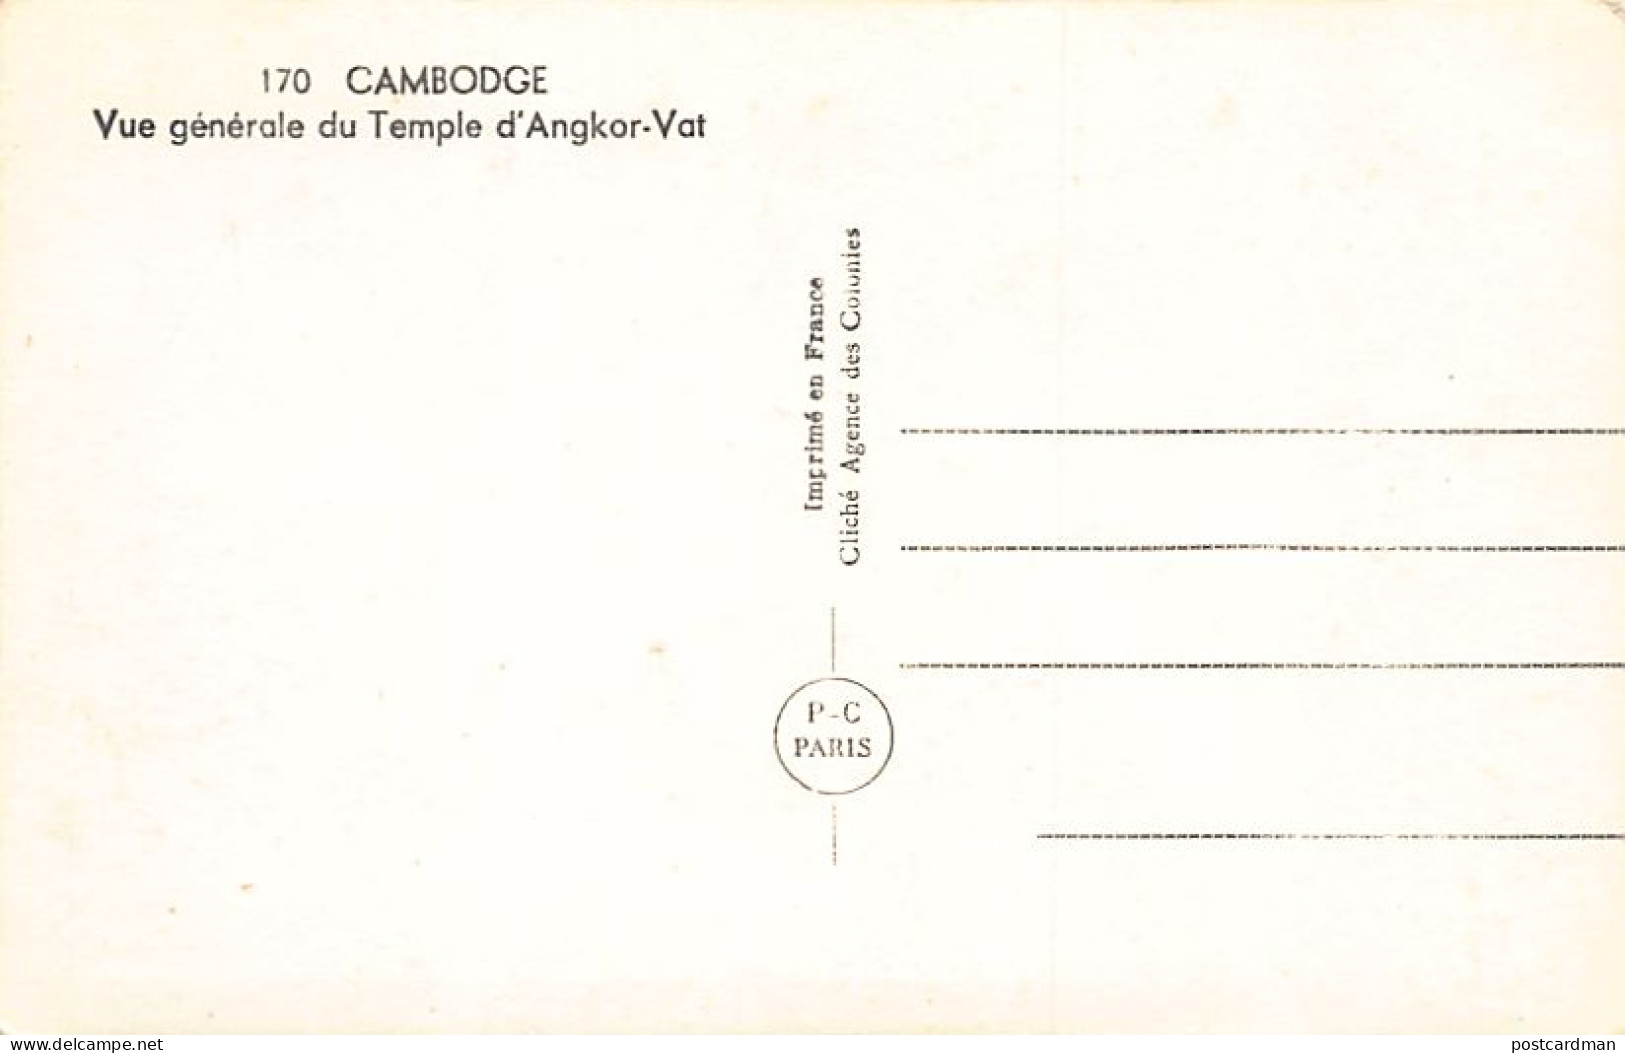 Cambodge - Vue Générale Du Temple D'Angkor-Vat - Ed. P-C Paris 170 - Cambodia